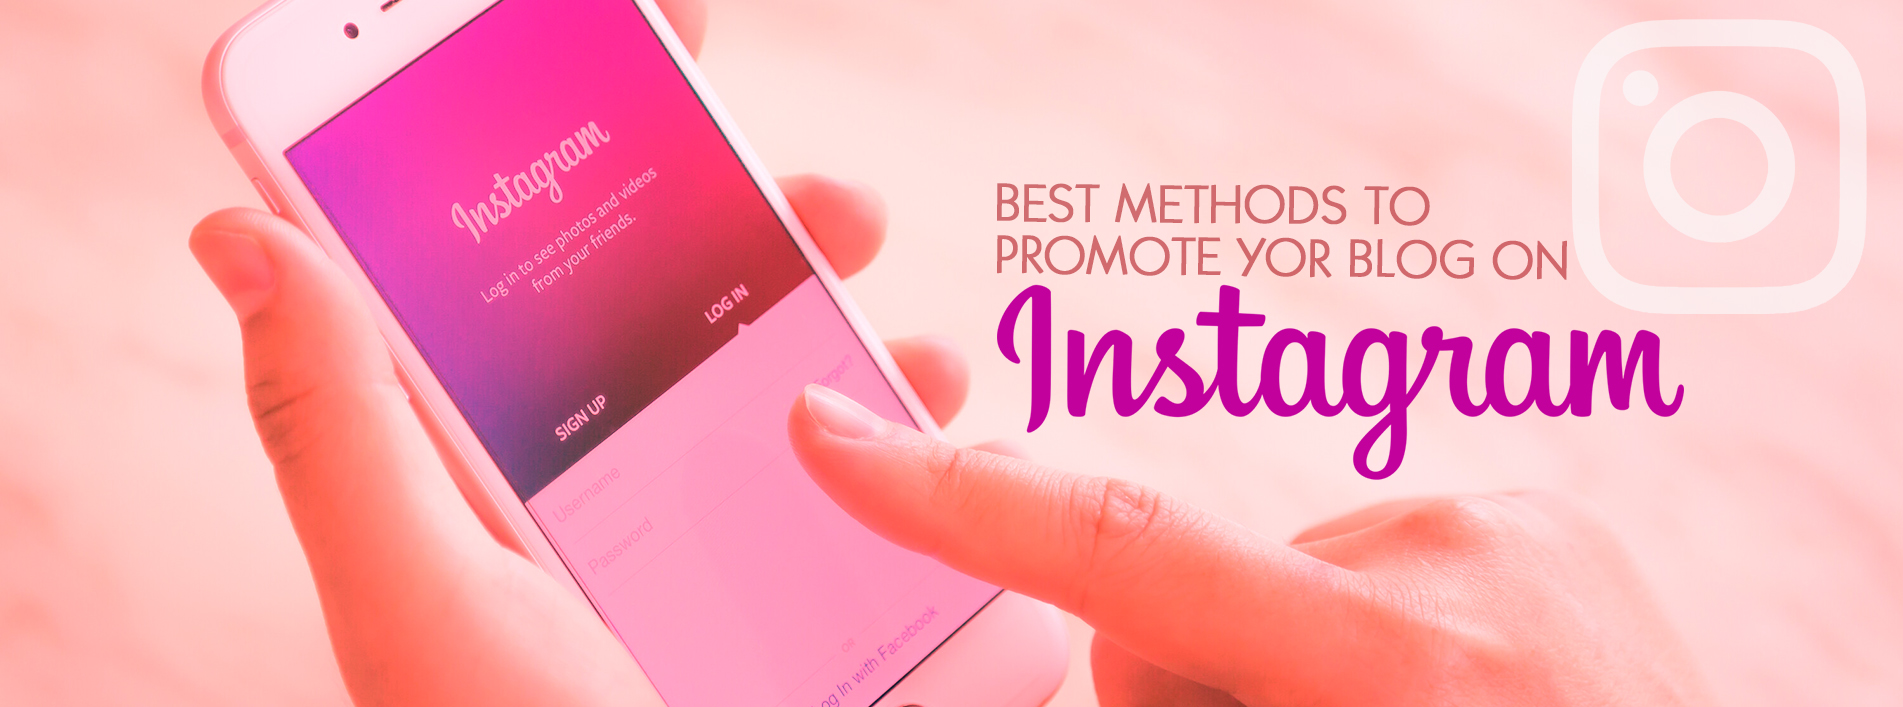 Best Methods to Promote Your Blog on Instagram